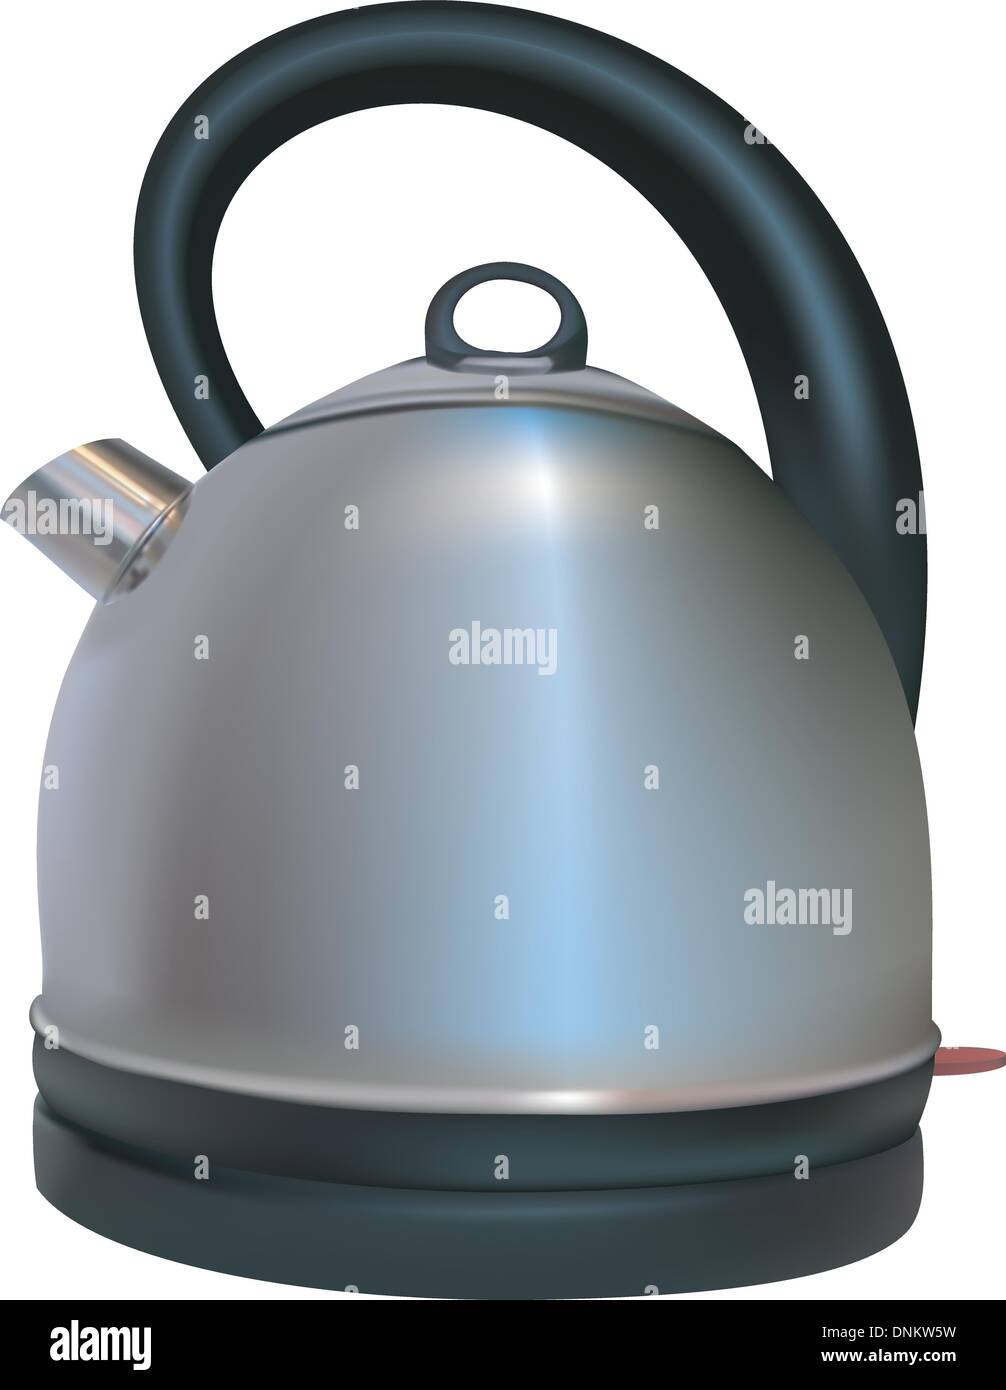 https://c8.alamy.com/comp/DNKW5W/an-illustration-of-a-kettle-or-tea-pot-DNKW5W.jpg